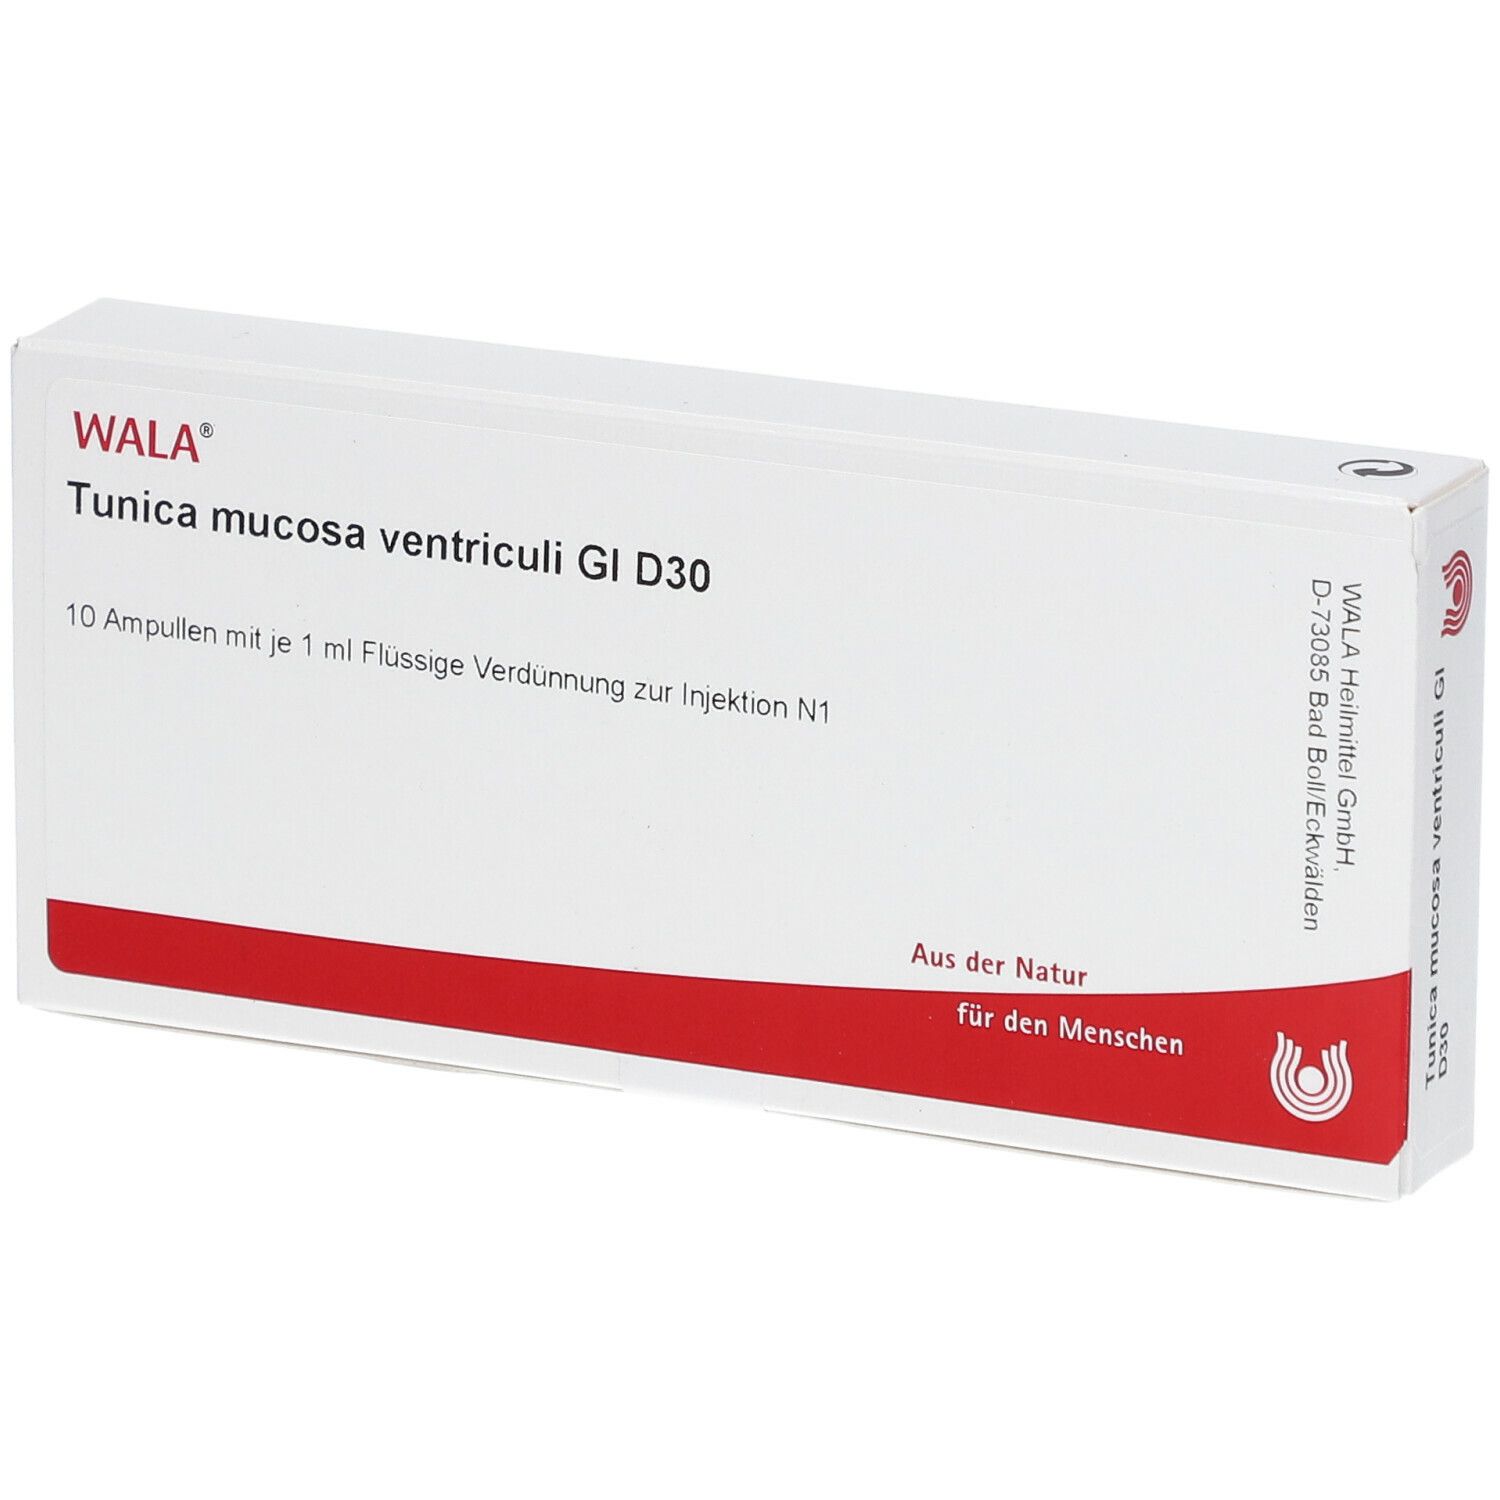 Wala® Tunica mucosa ventriculi Gl D 30